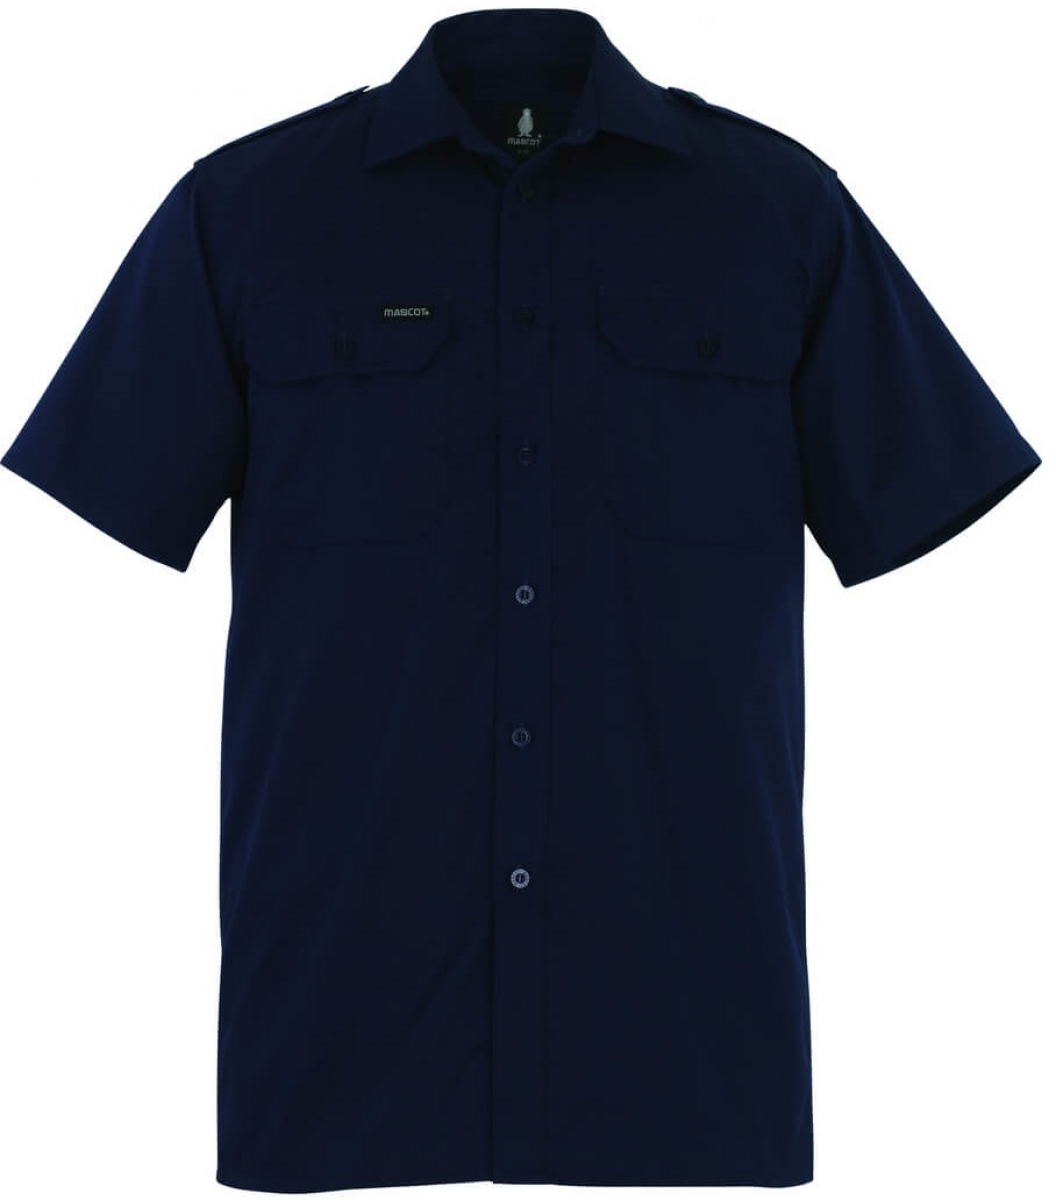 MASCOT-Worker-Shirts, Hemd, Savannah, 205 g/m, marine